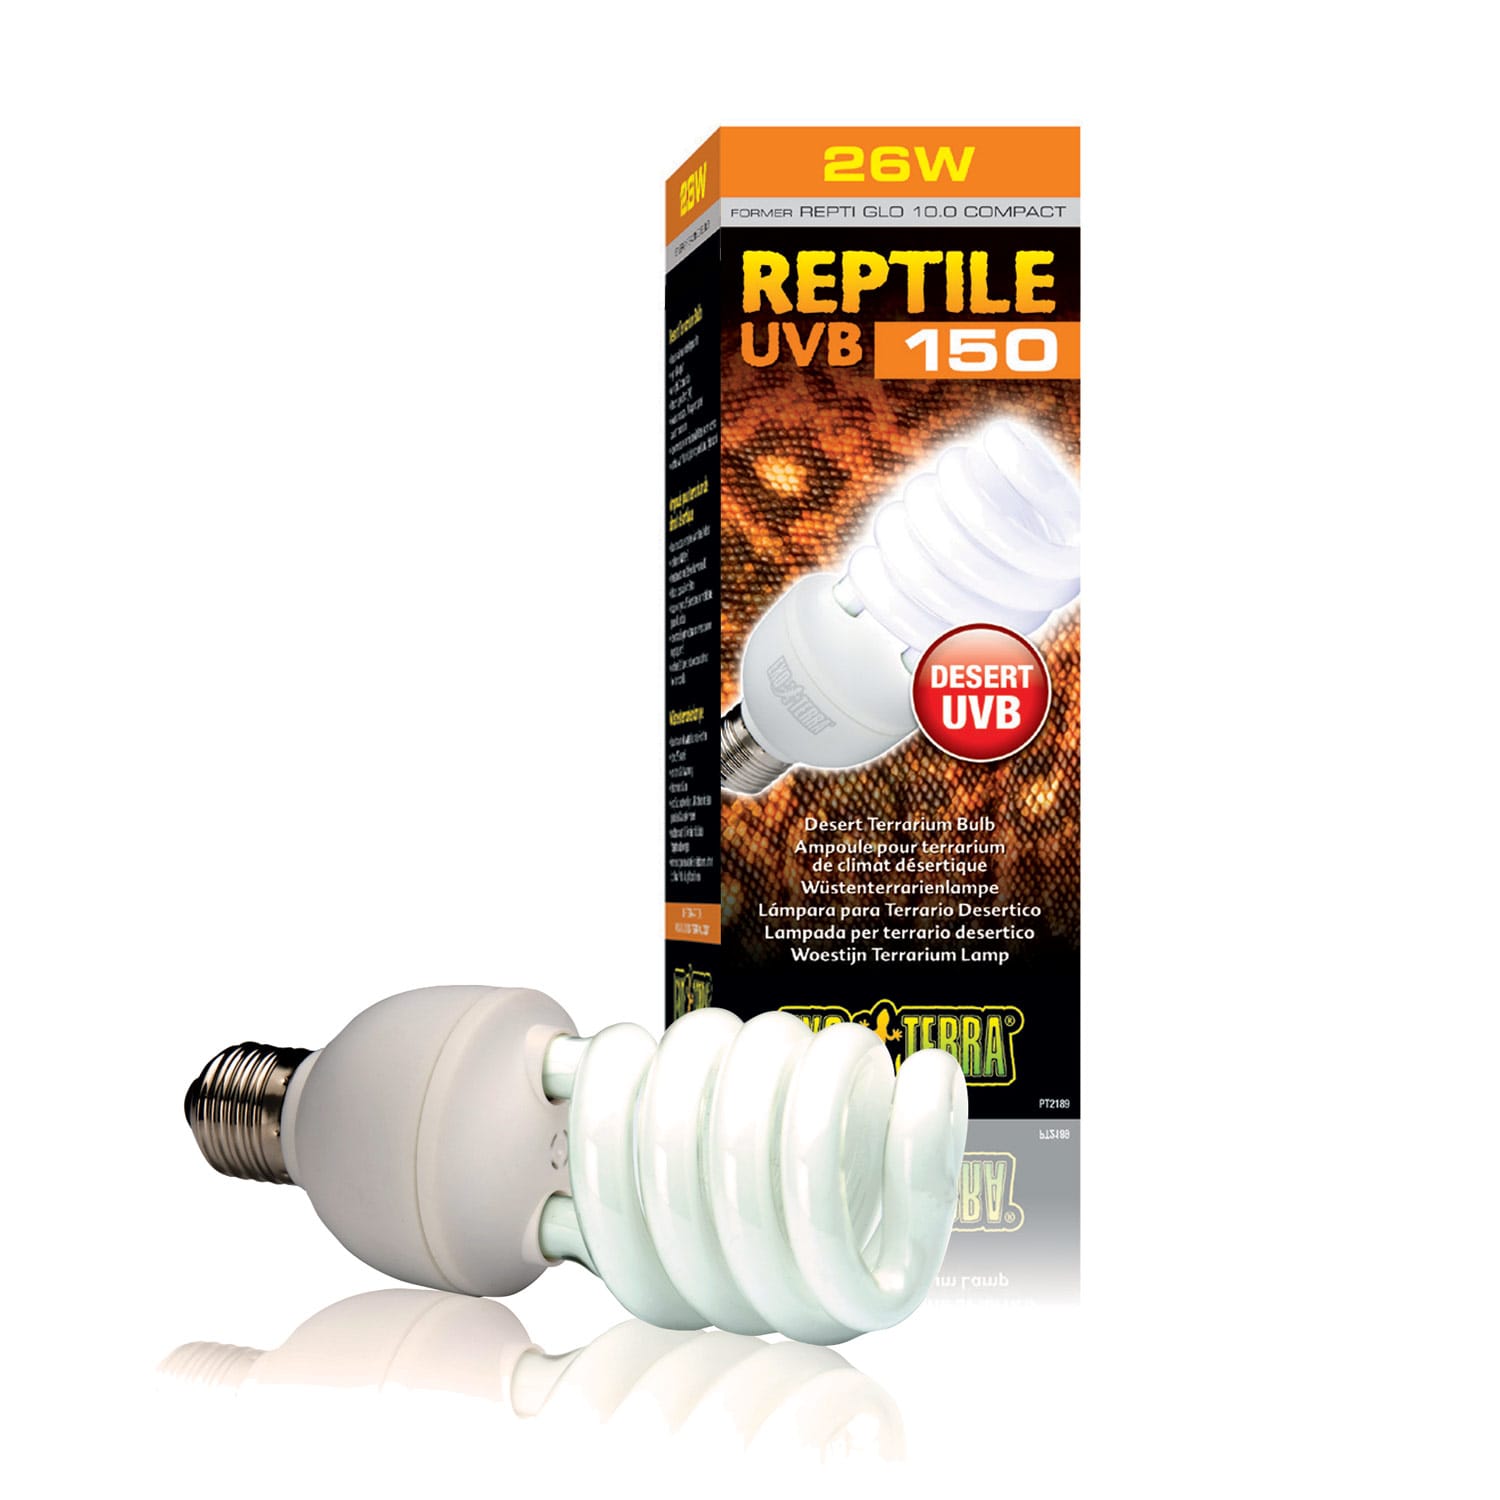 MIXJOY 100W Reptile Heat Lamp Bulb Full Spectrum UVA UVB Sun Light for Reptile and Amphibian Use 